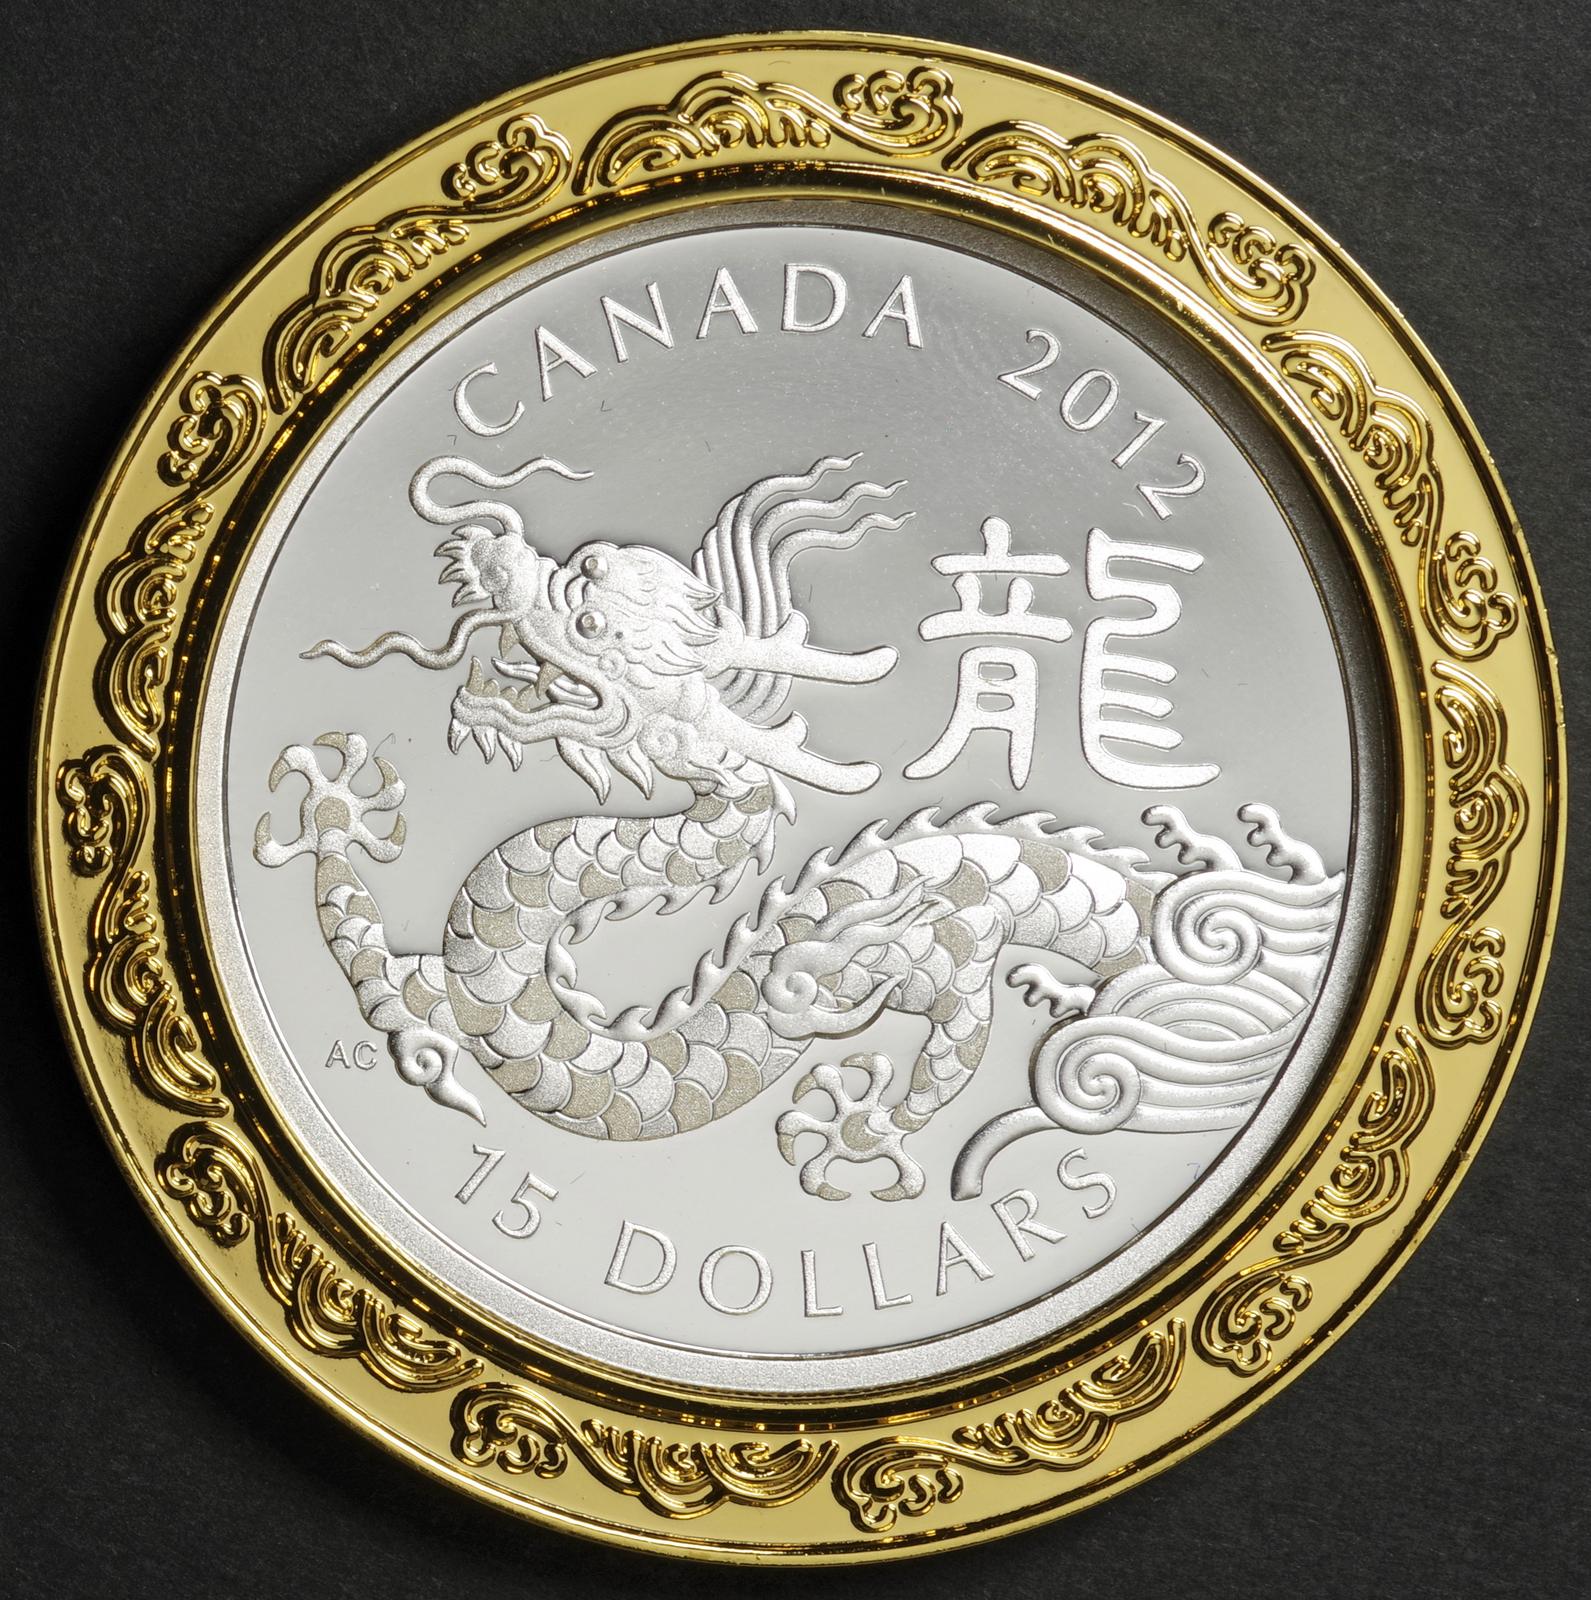 Canada-カナダ 十二支干支動物 辰年龍図 15ドル銀貨 プルーフ 2012年 